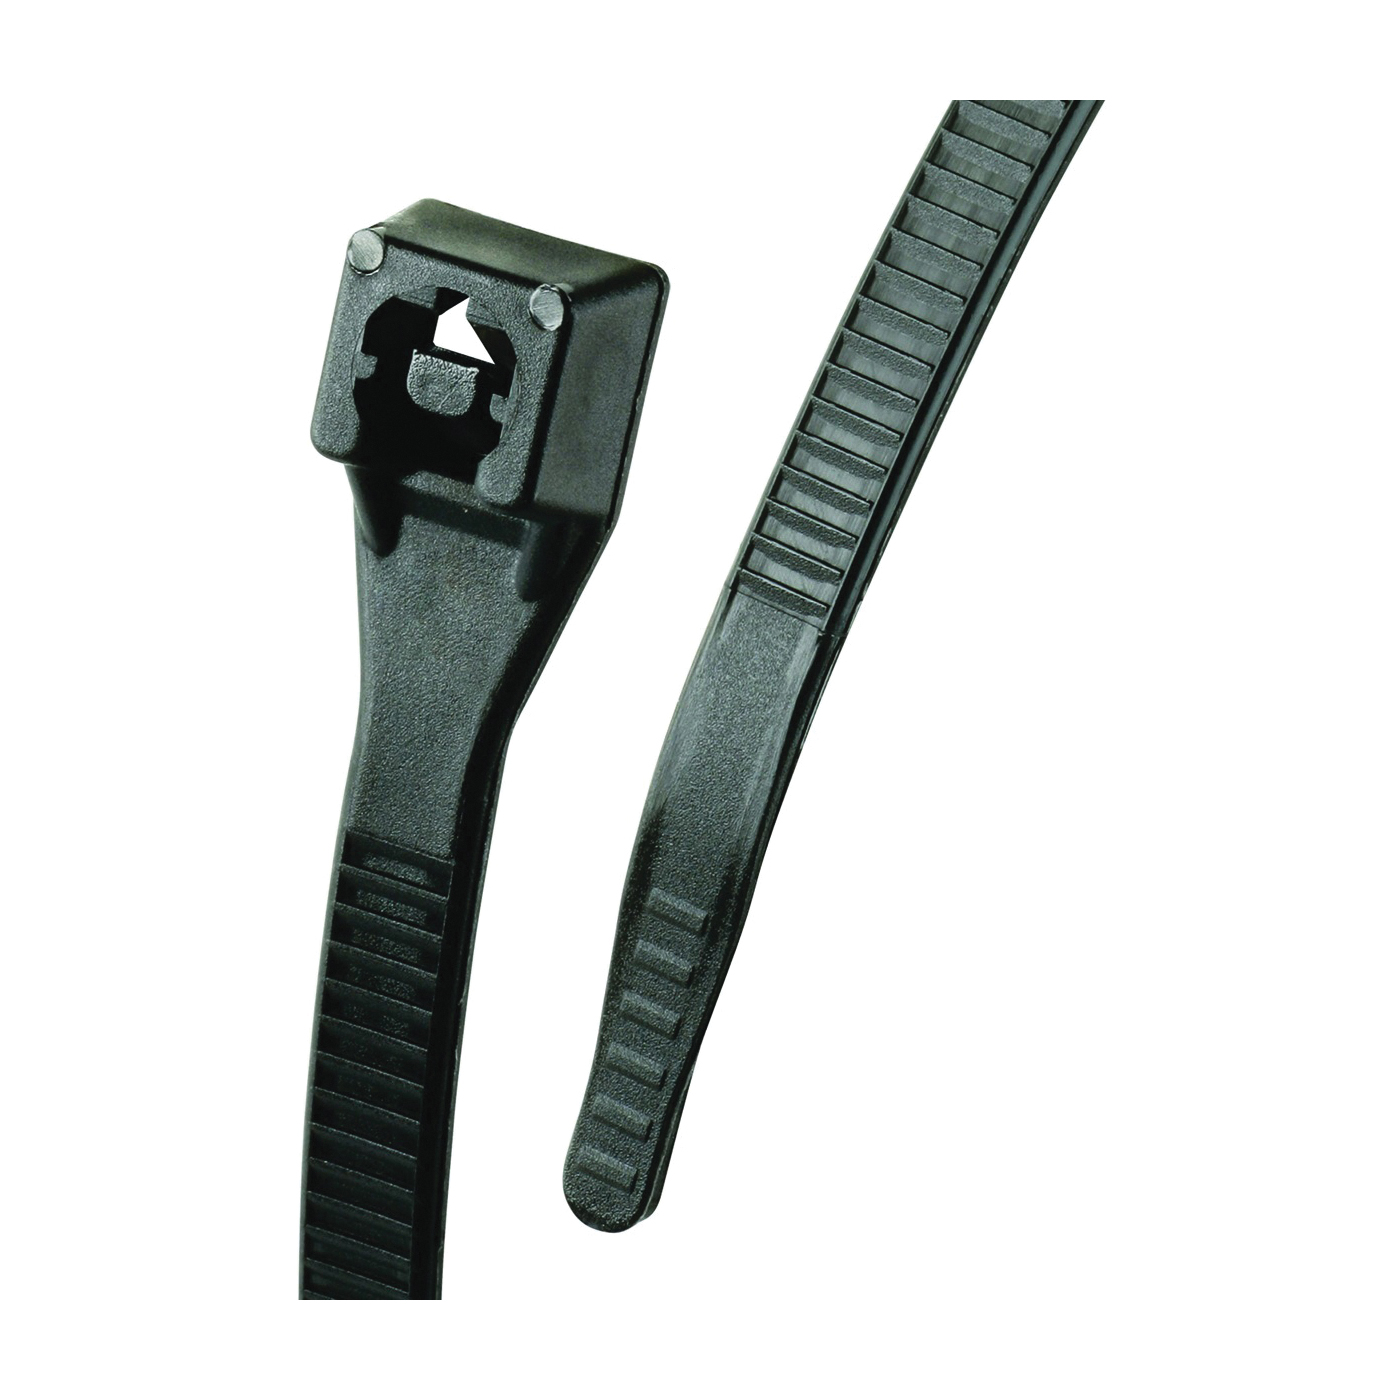 GB Xtreme 46-308UVBFZ Cable Tie, Nylon, Black - 1